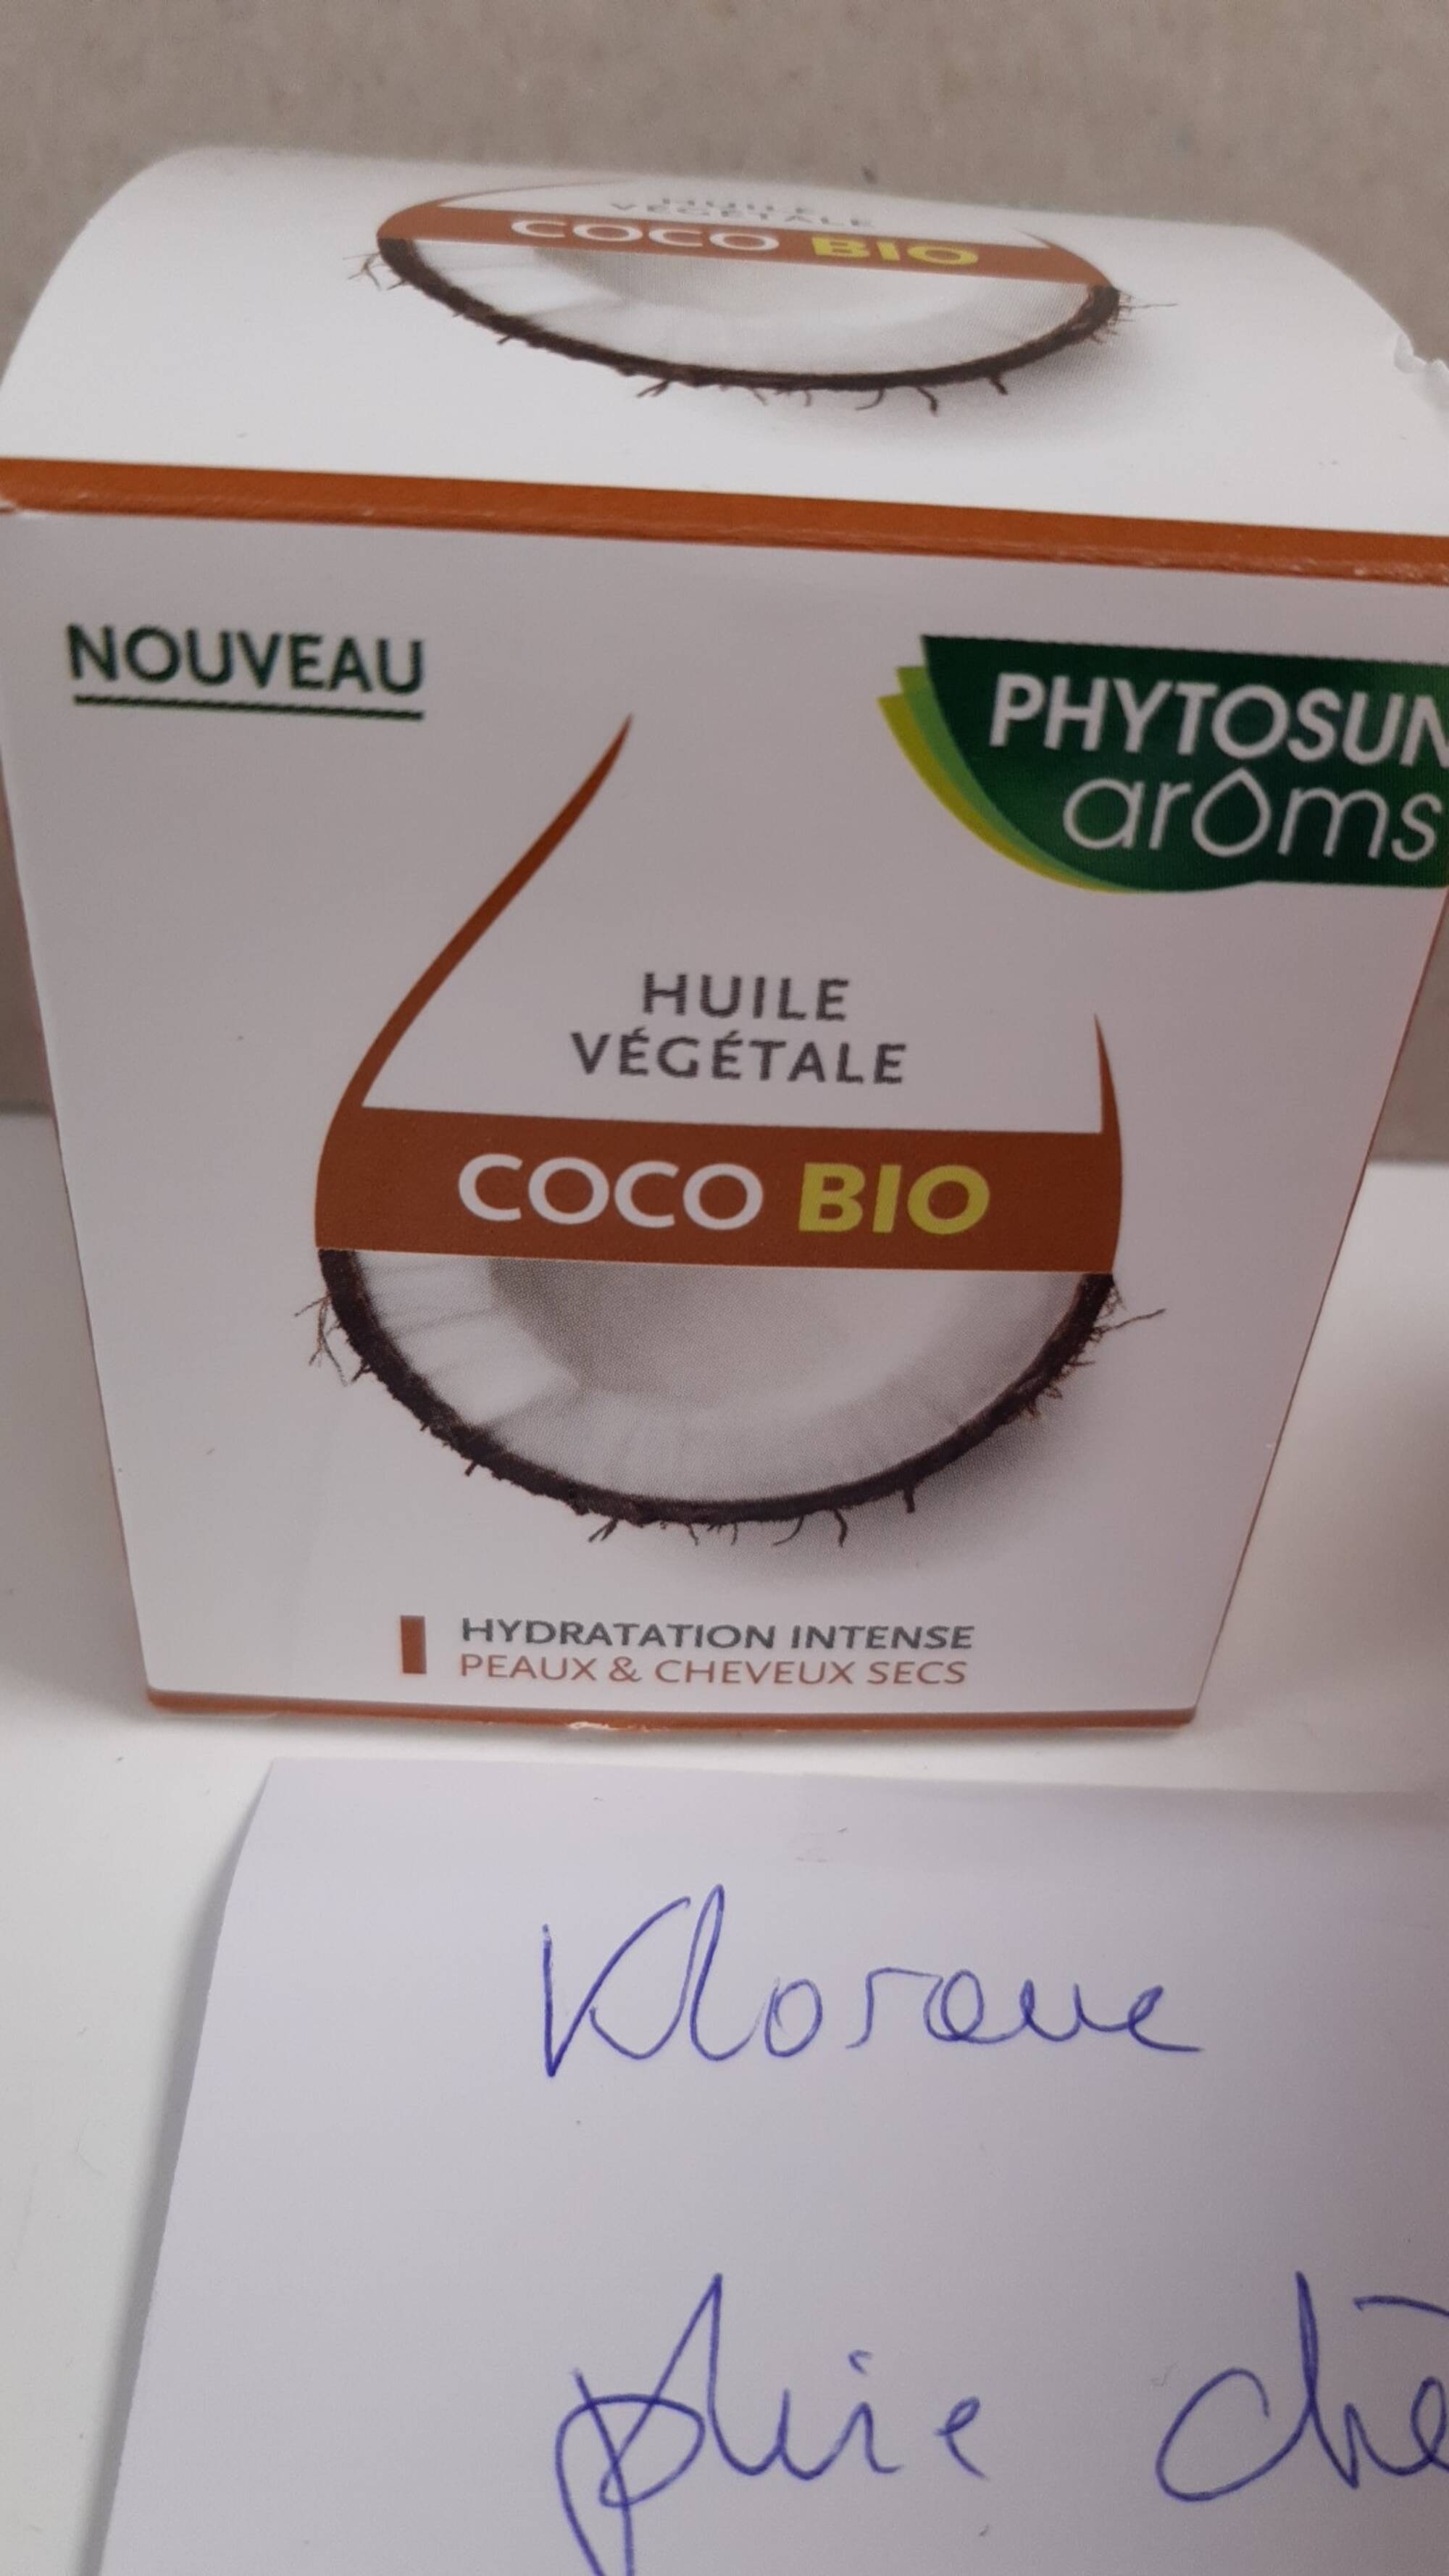 PHYTOSUN AROMS - Coco bio - Huile végétale